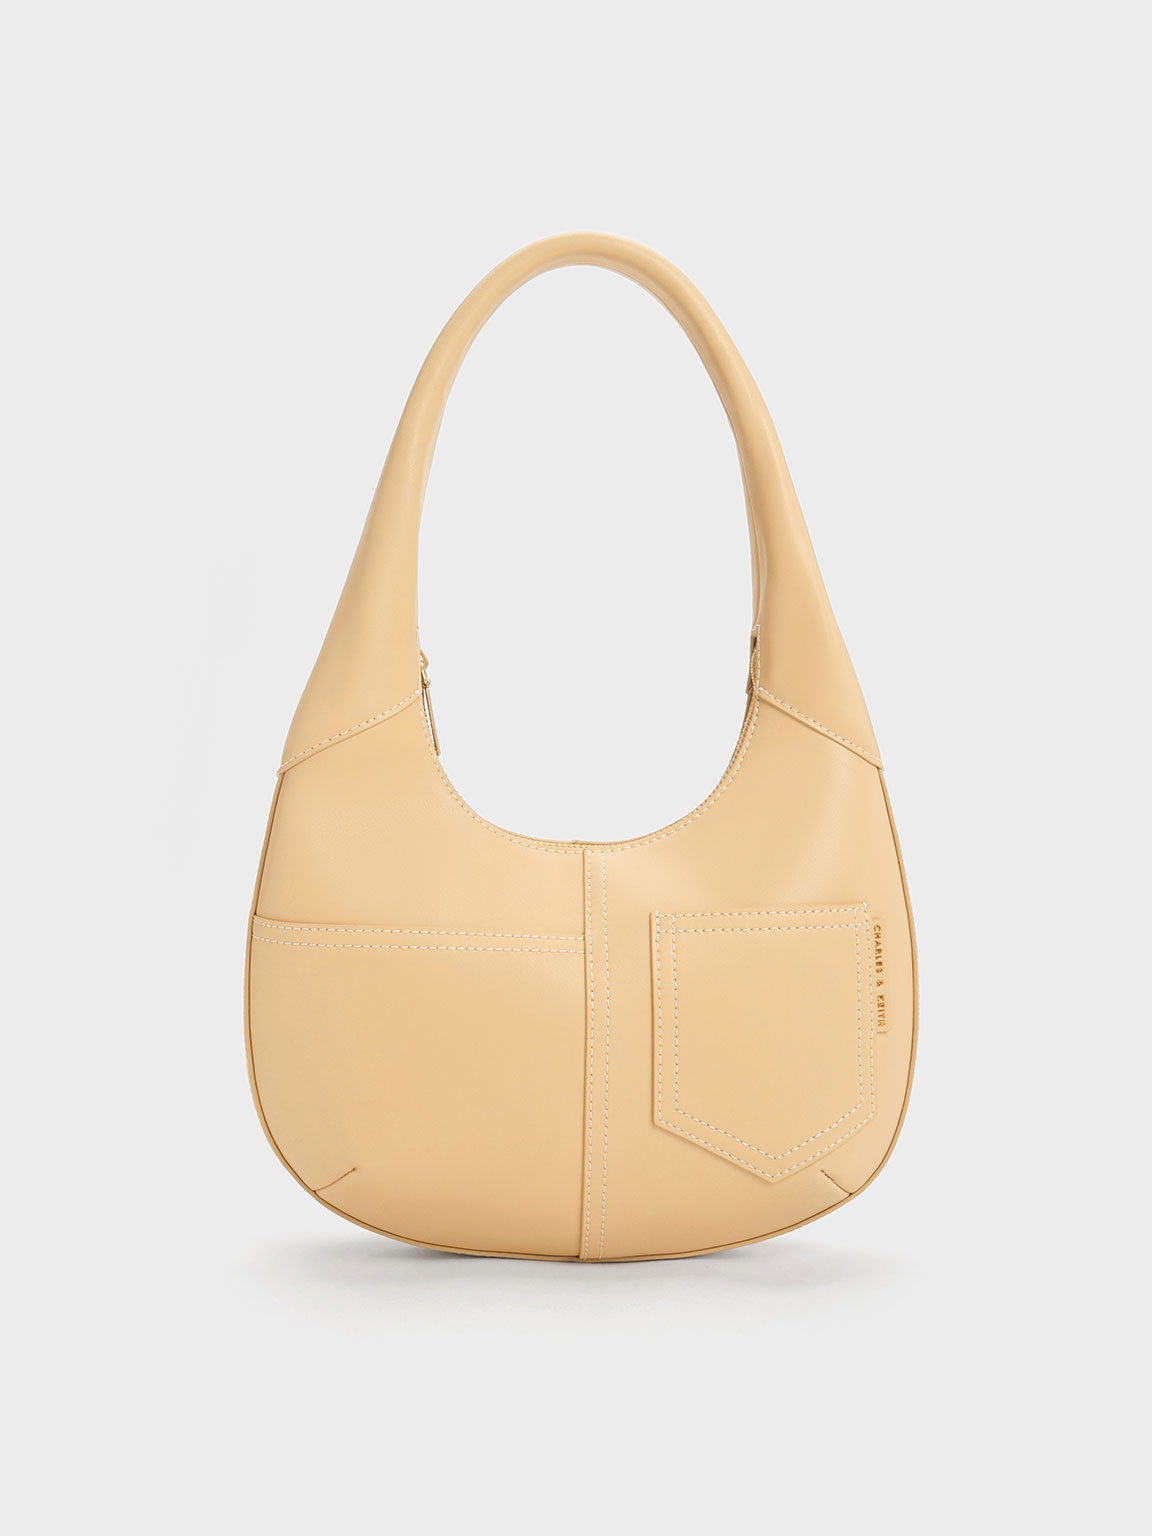 Medium Leather Hobo Bag - Crossbody Hobo Purse - Slouchy Shoulder Purse |  Laroll Bags